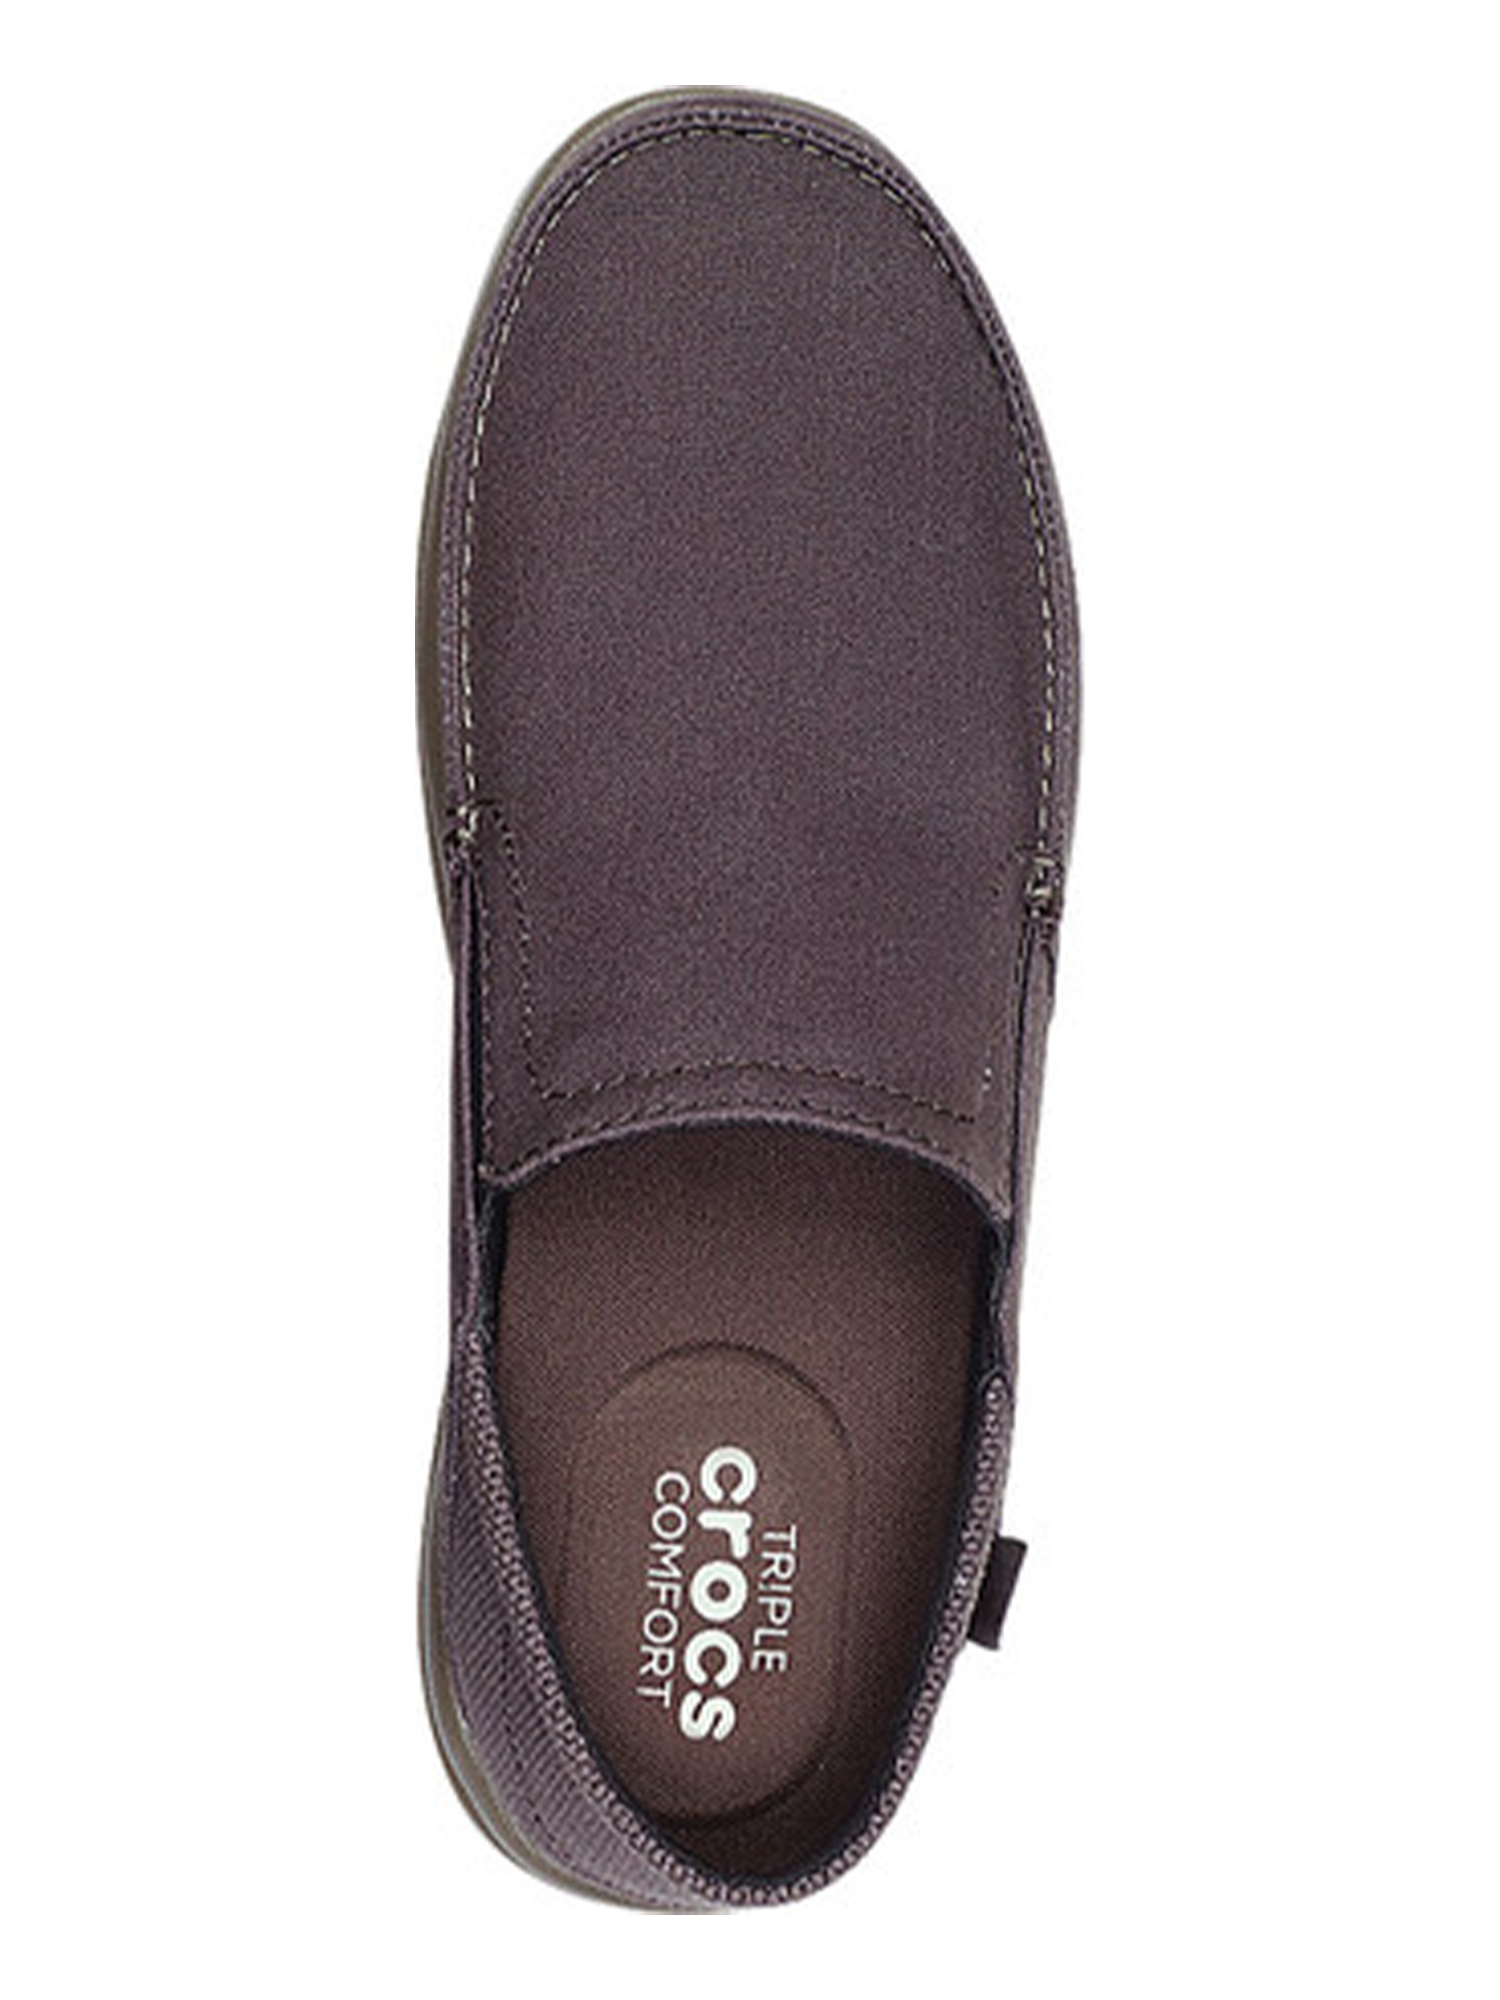 Crocs Men's Santa Cruz Convertible Slip On Loafer - image 4 of 5